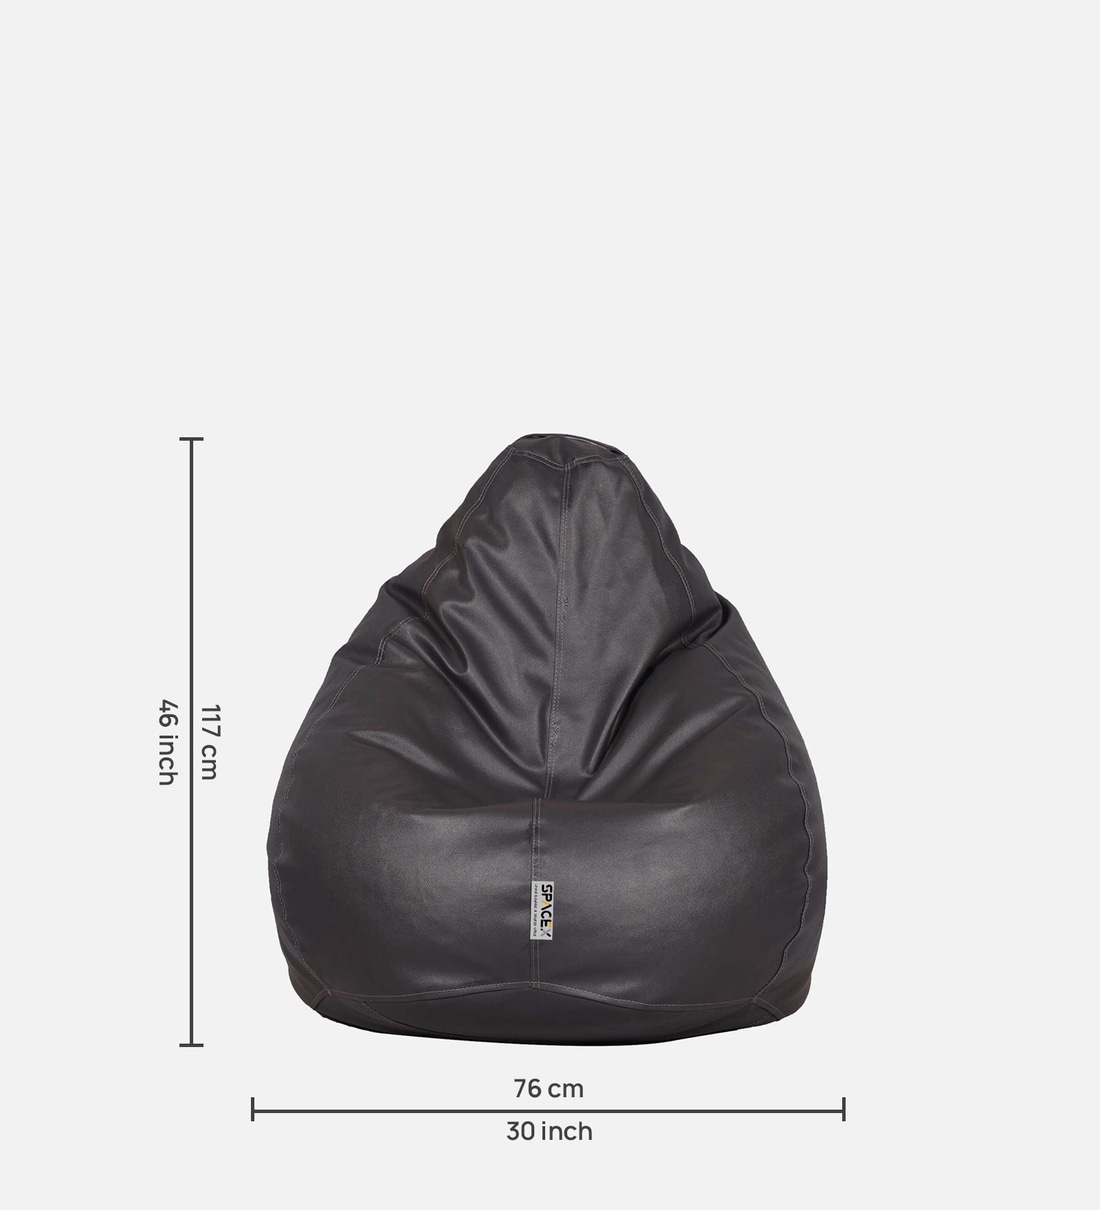 Big Joe Milano Large Bean Bag Chair, Espresso Blazer, Vegan Leather Leather  Polyester Blend, 3.5 feet Big - Walmart.com